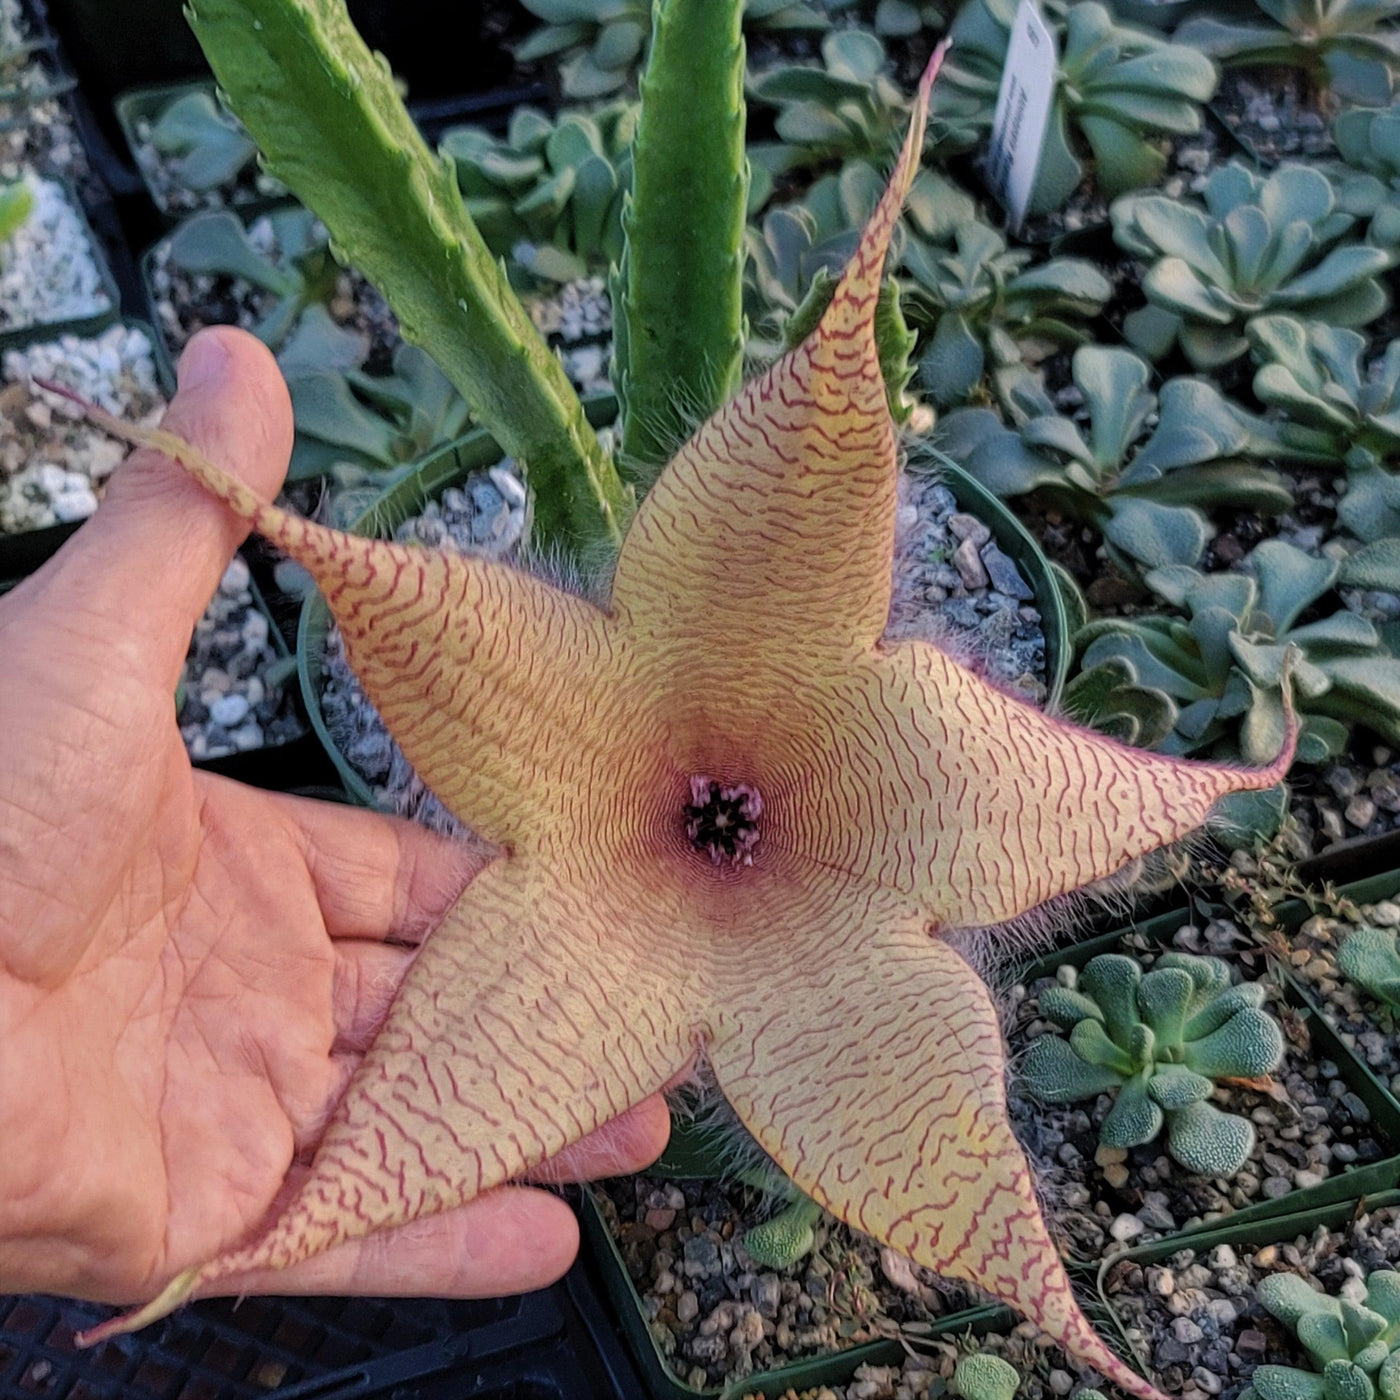 Carrion Plant - Stapelia gigantea